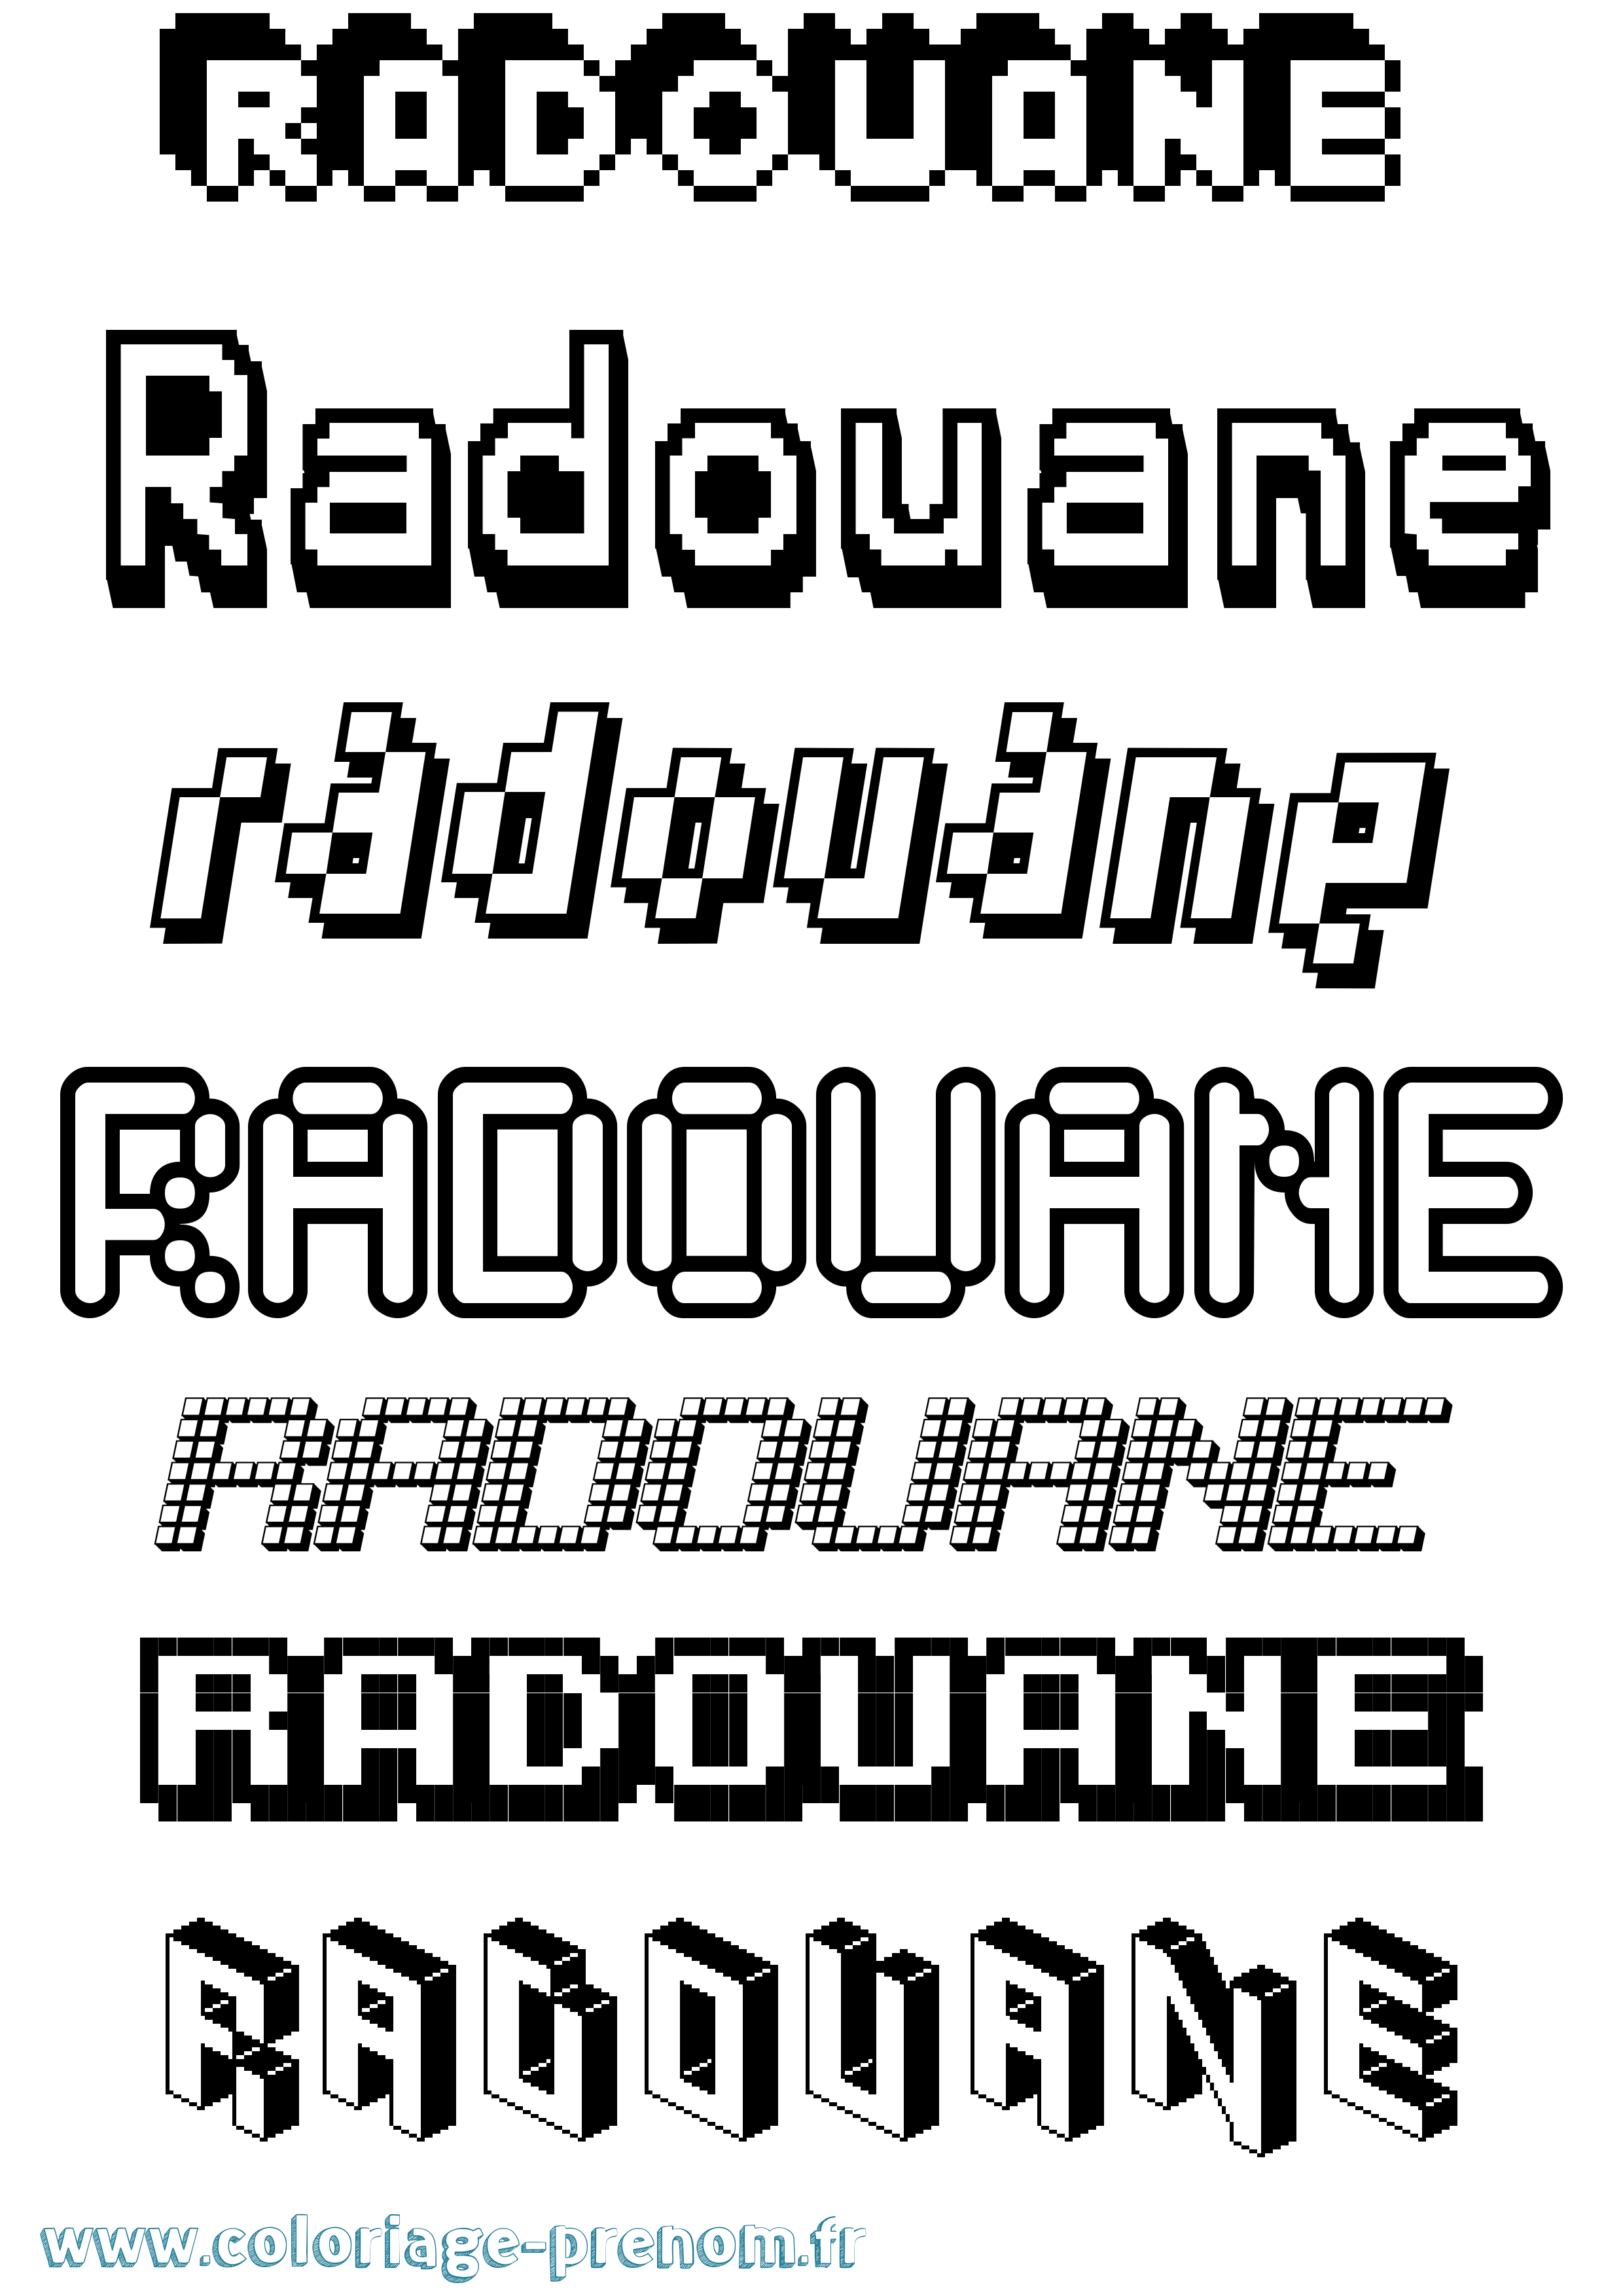 Coloriage prénom Radouane Pixel